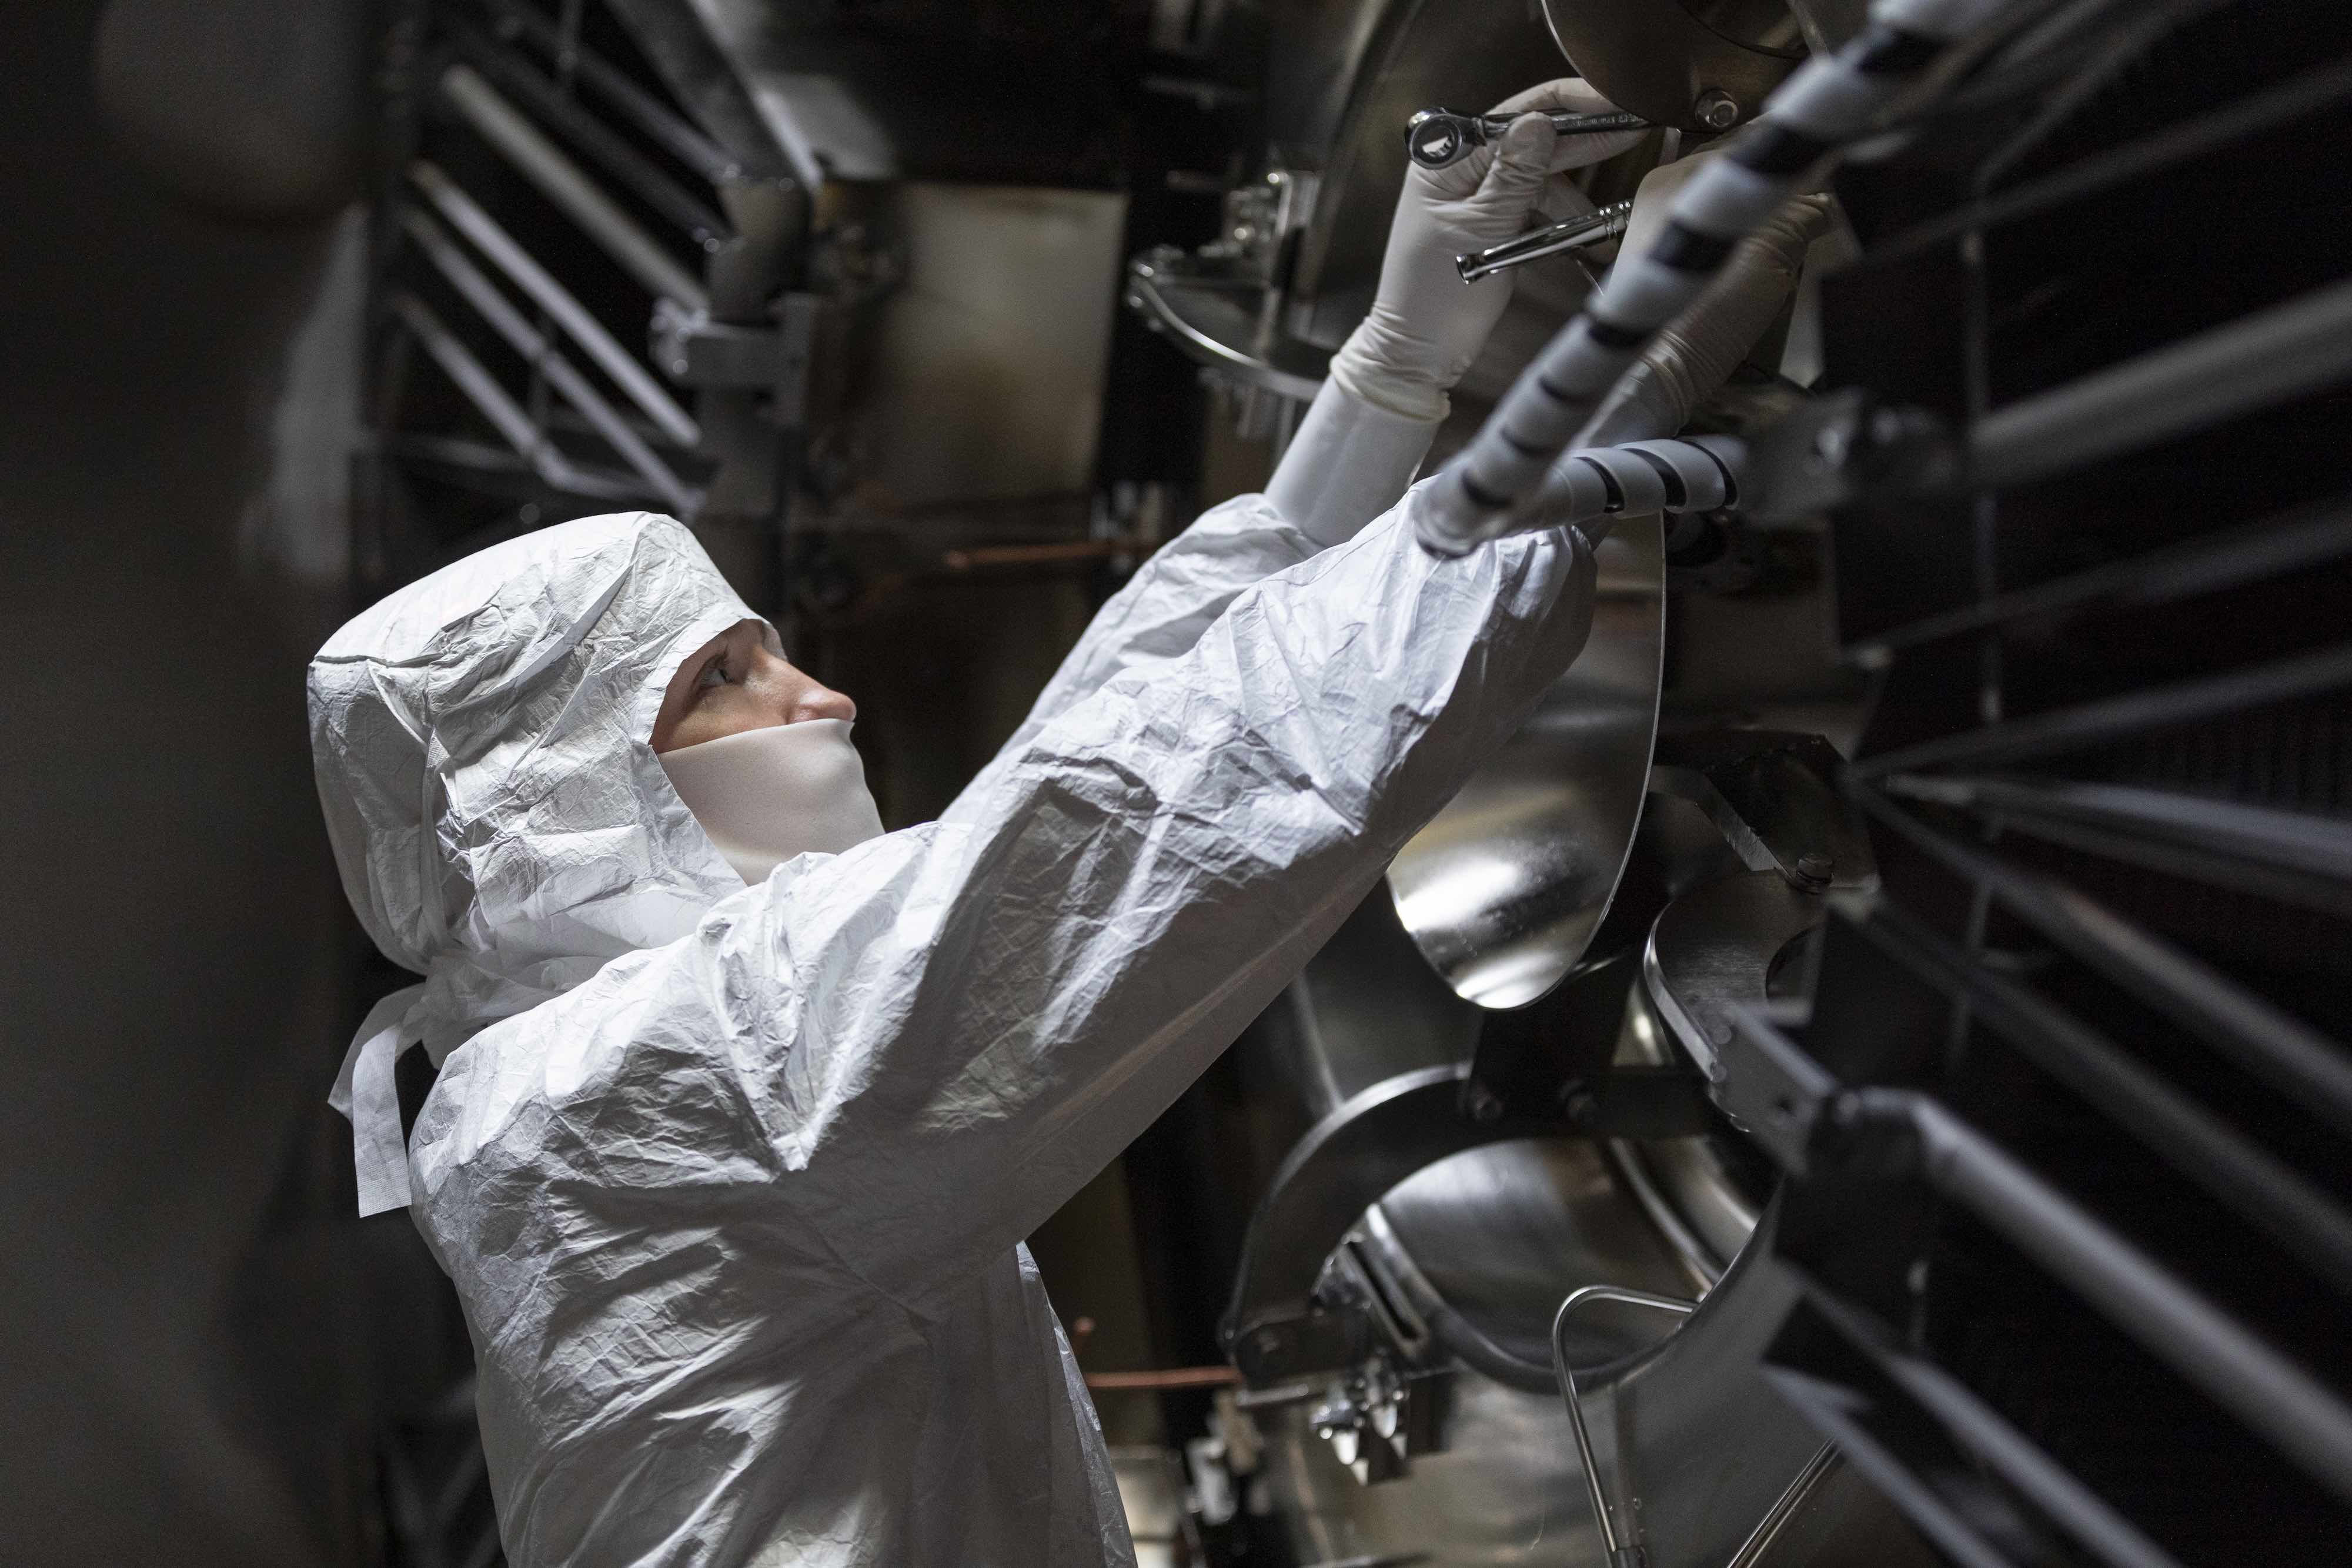 A technician working inside TAE's Norman reactor